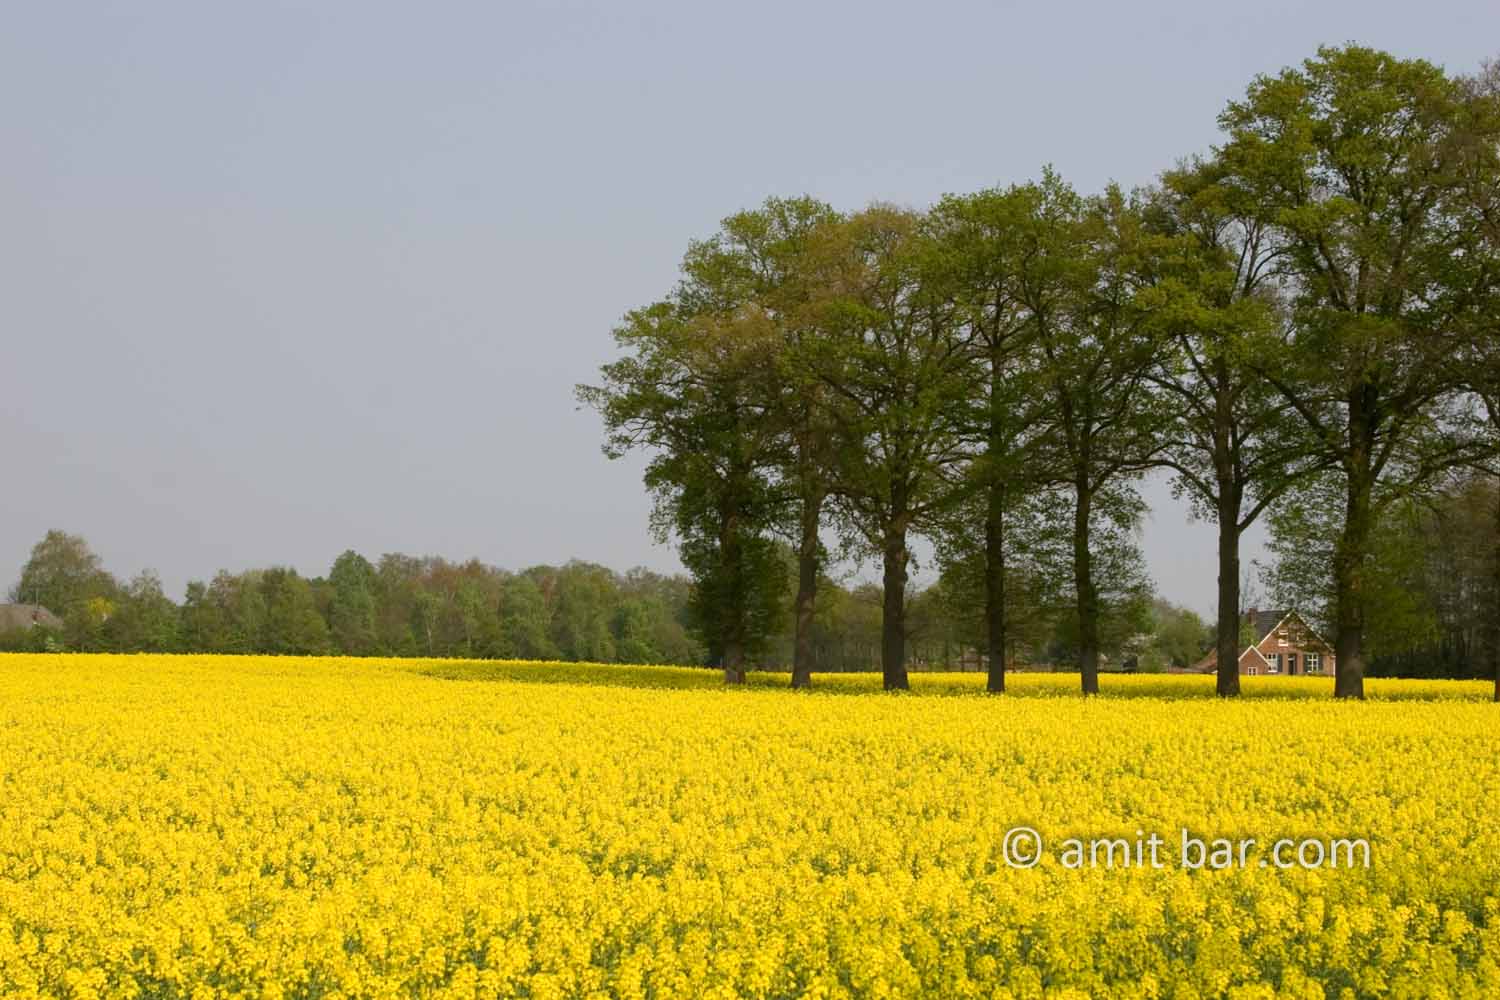 Dutch Spring: Rapeseed field I: Rapeseed field with oak trees